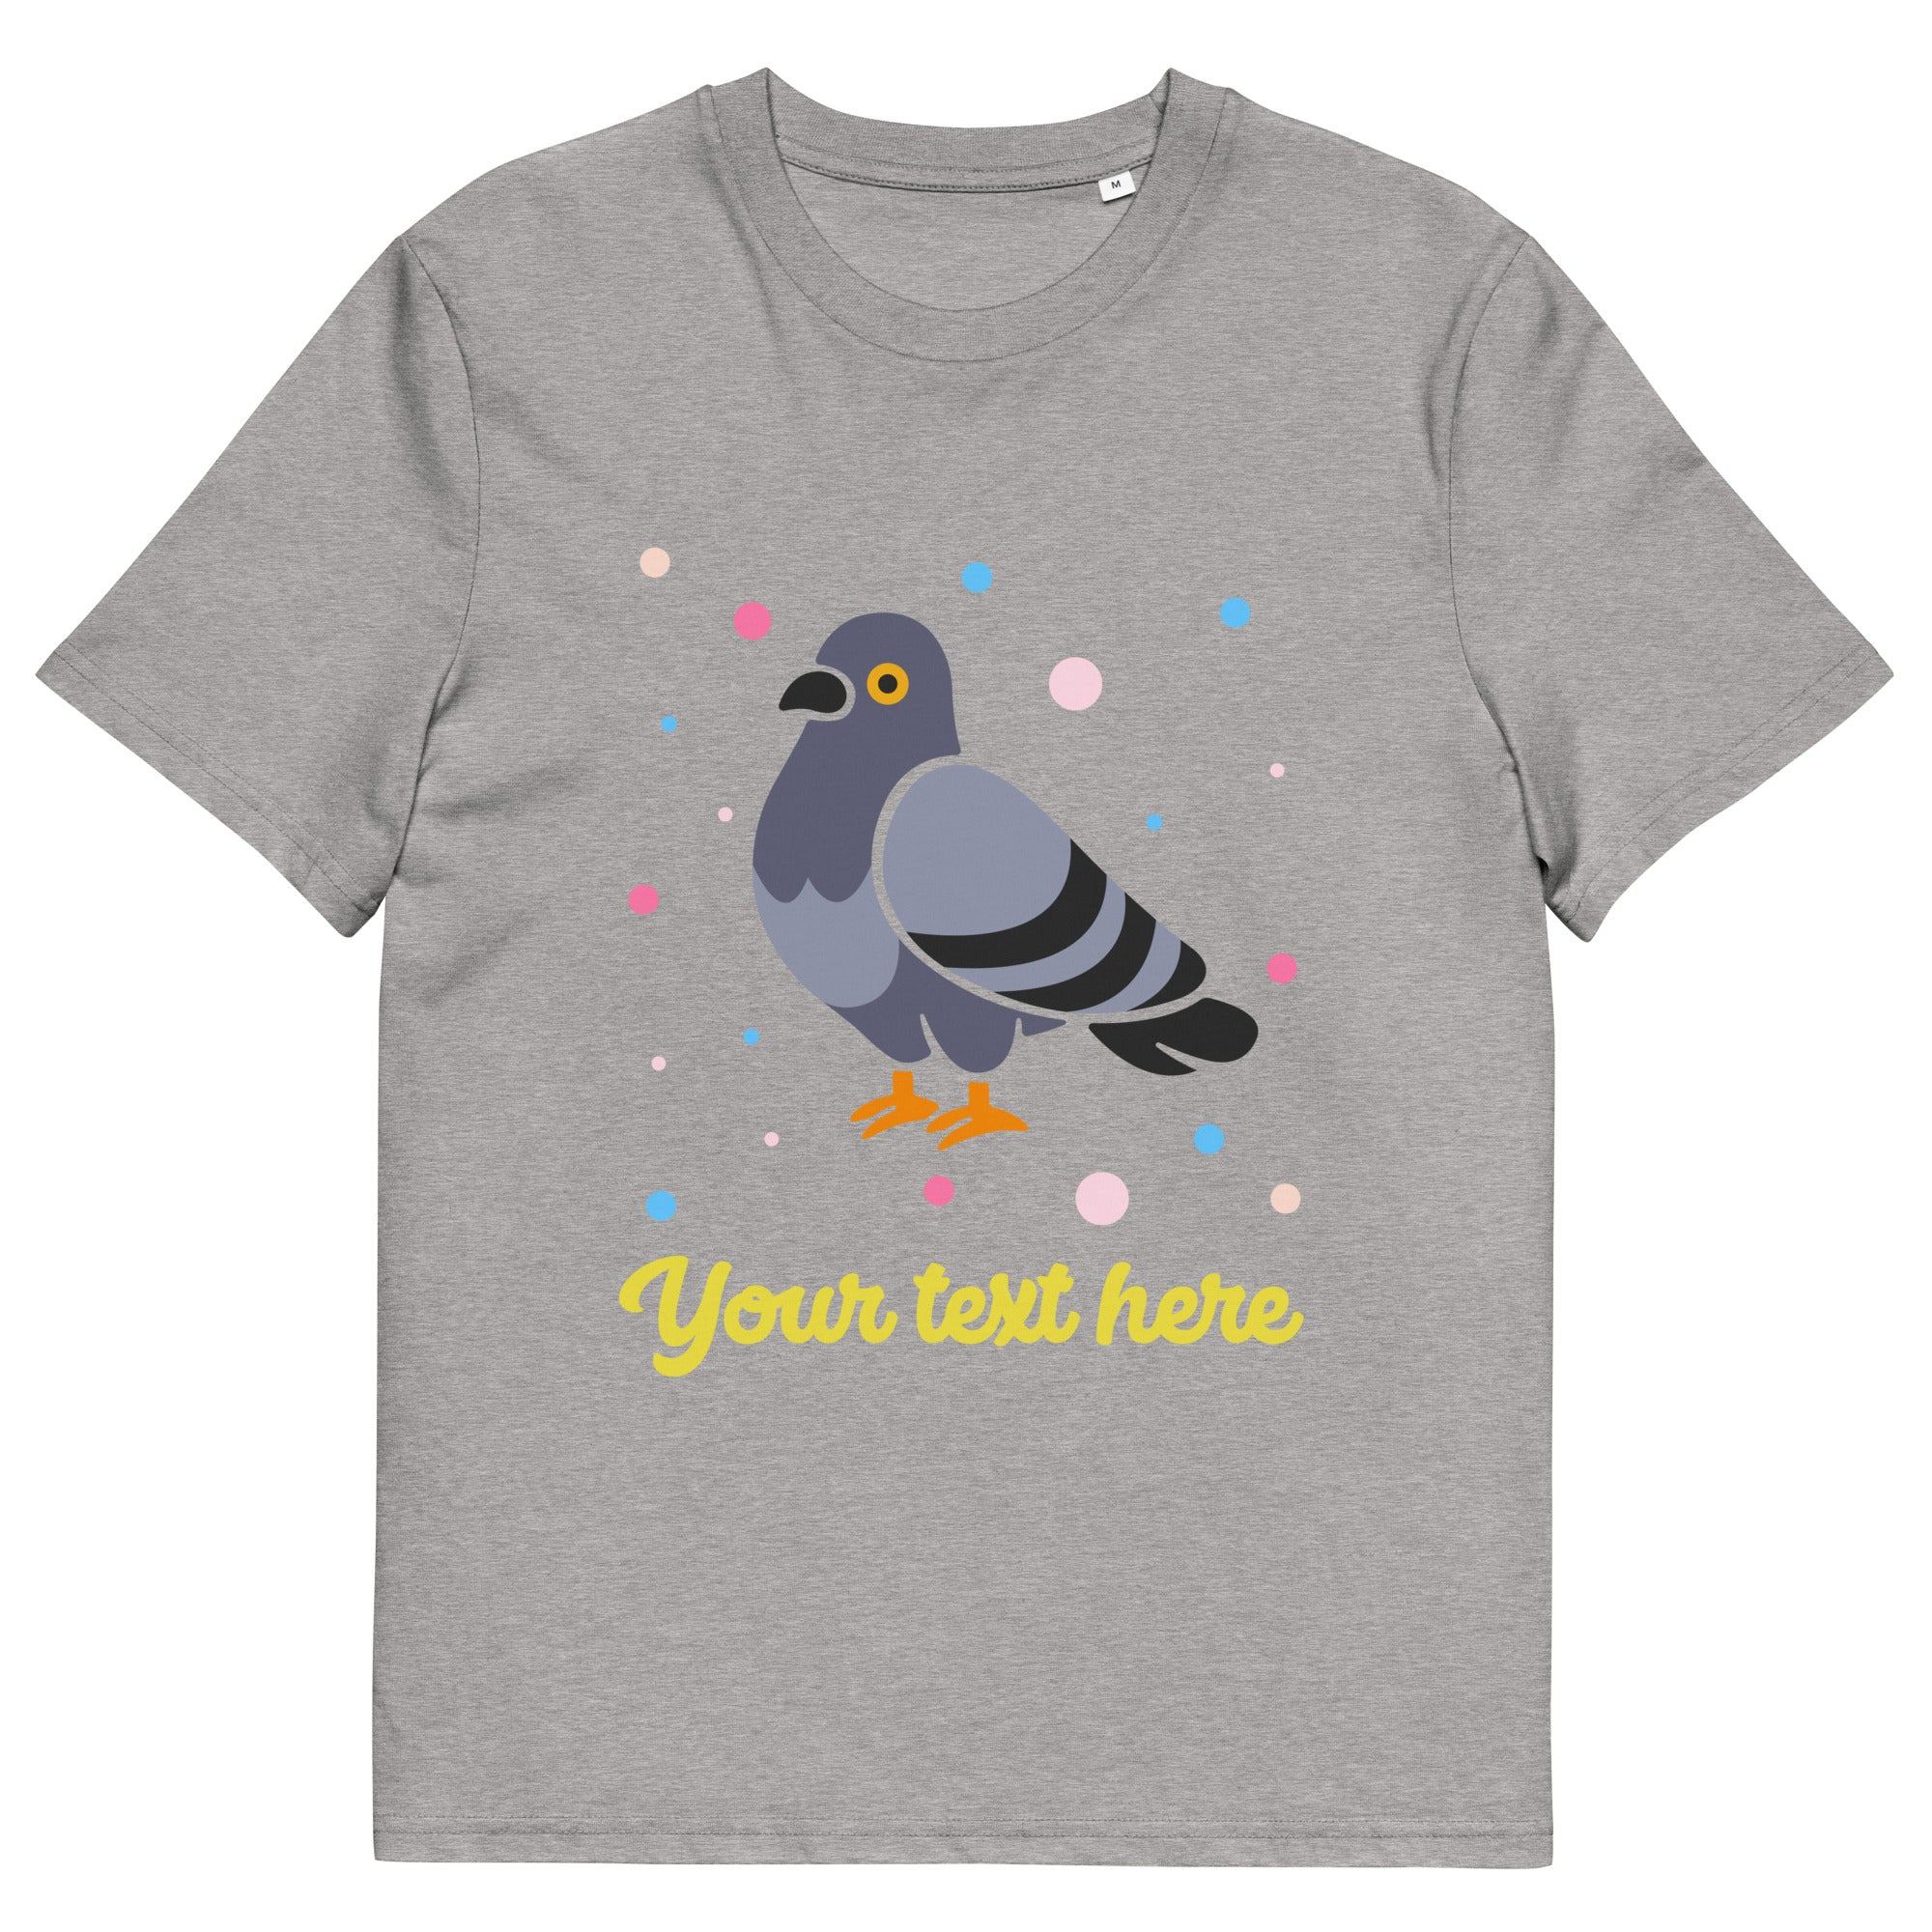 Personalised Custom Text - Organic Cotton Adults Unisex T-Shirt - London Doodles - Pigeon - Heather Grey